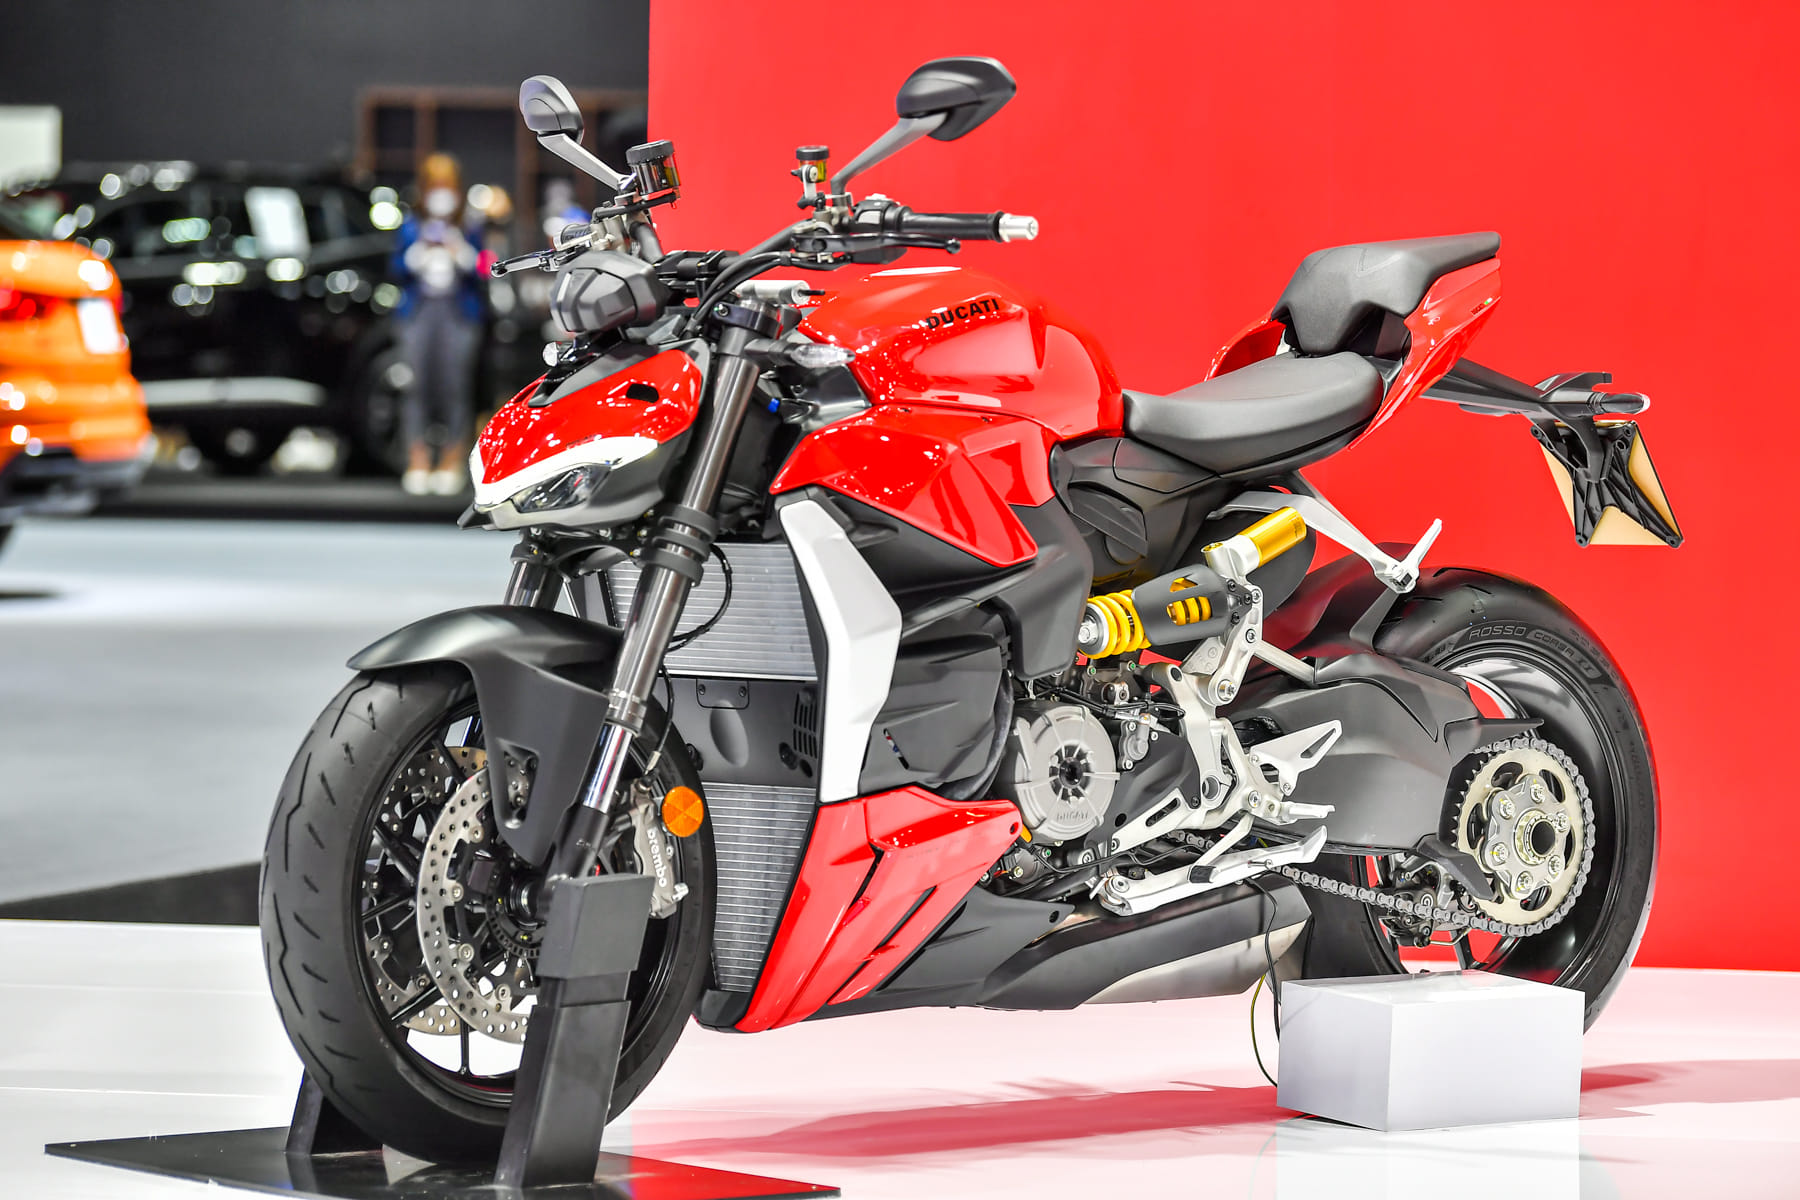 Ducati Motor Show 2022